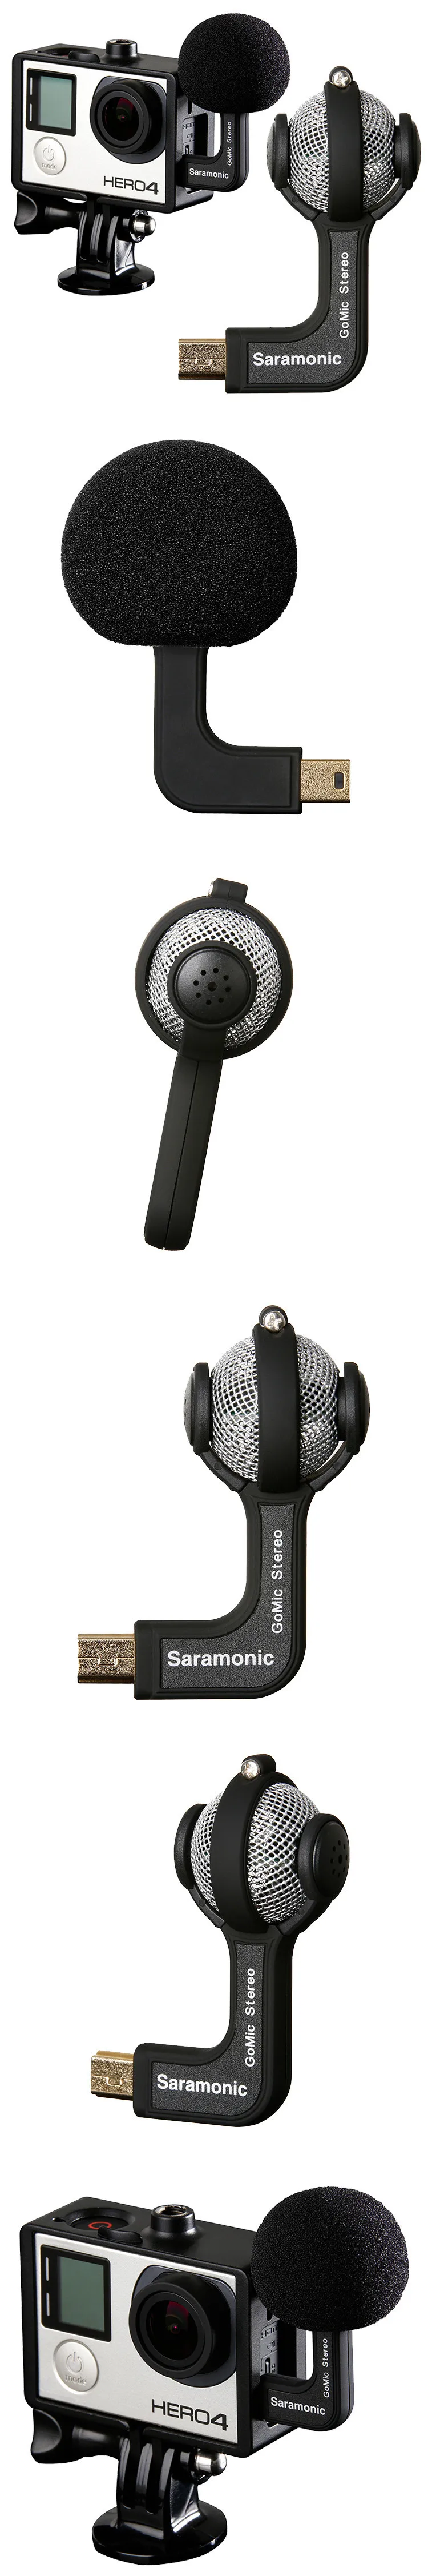 Saramonic G-Mic мини шаровой стерео-микрофон Микрофон для Gopro Hero 4 4+ 3+ 3 камеры Gmic